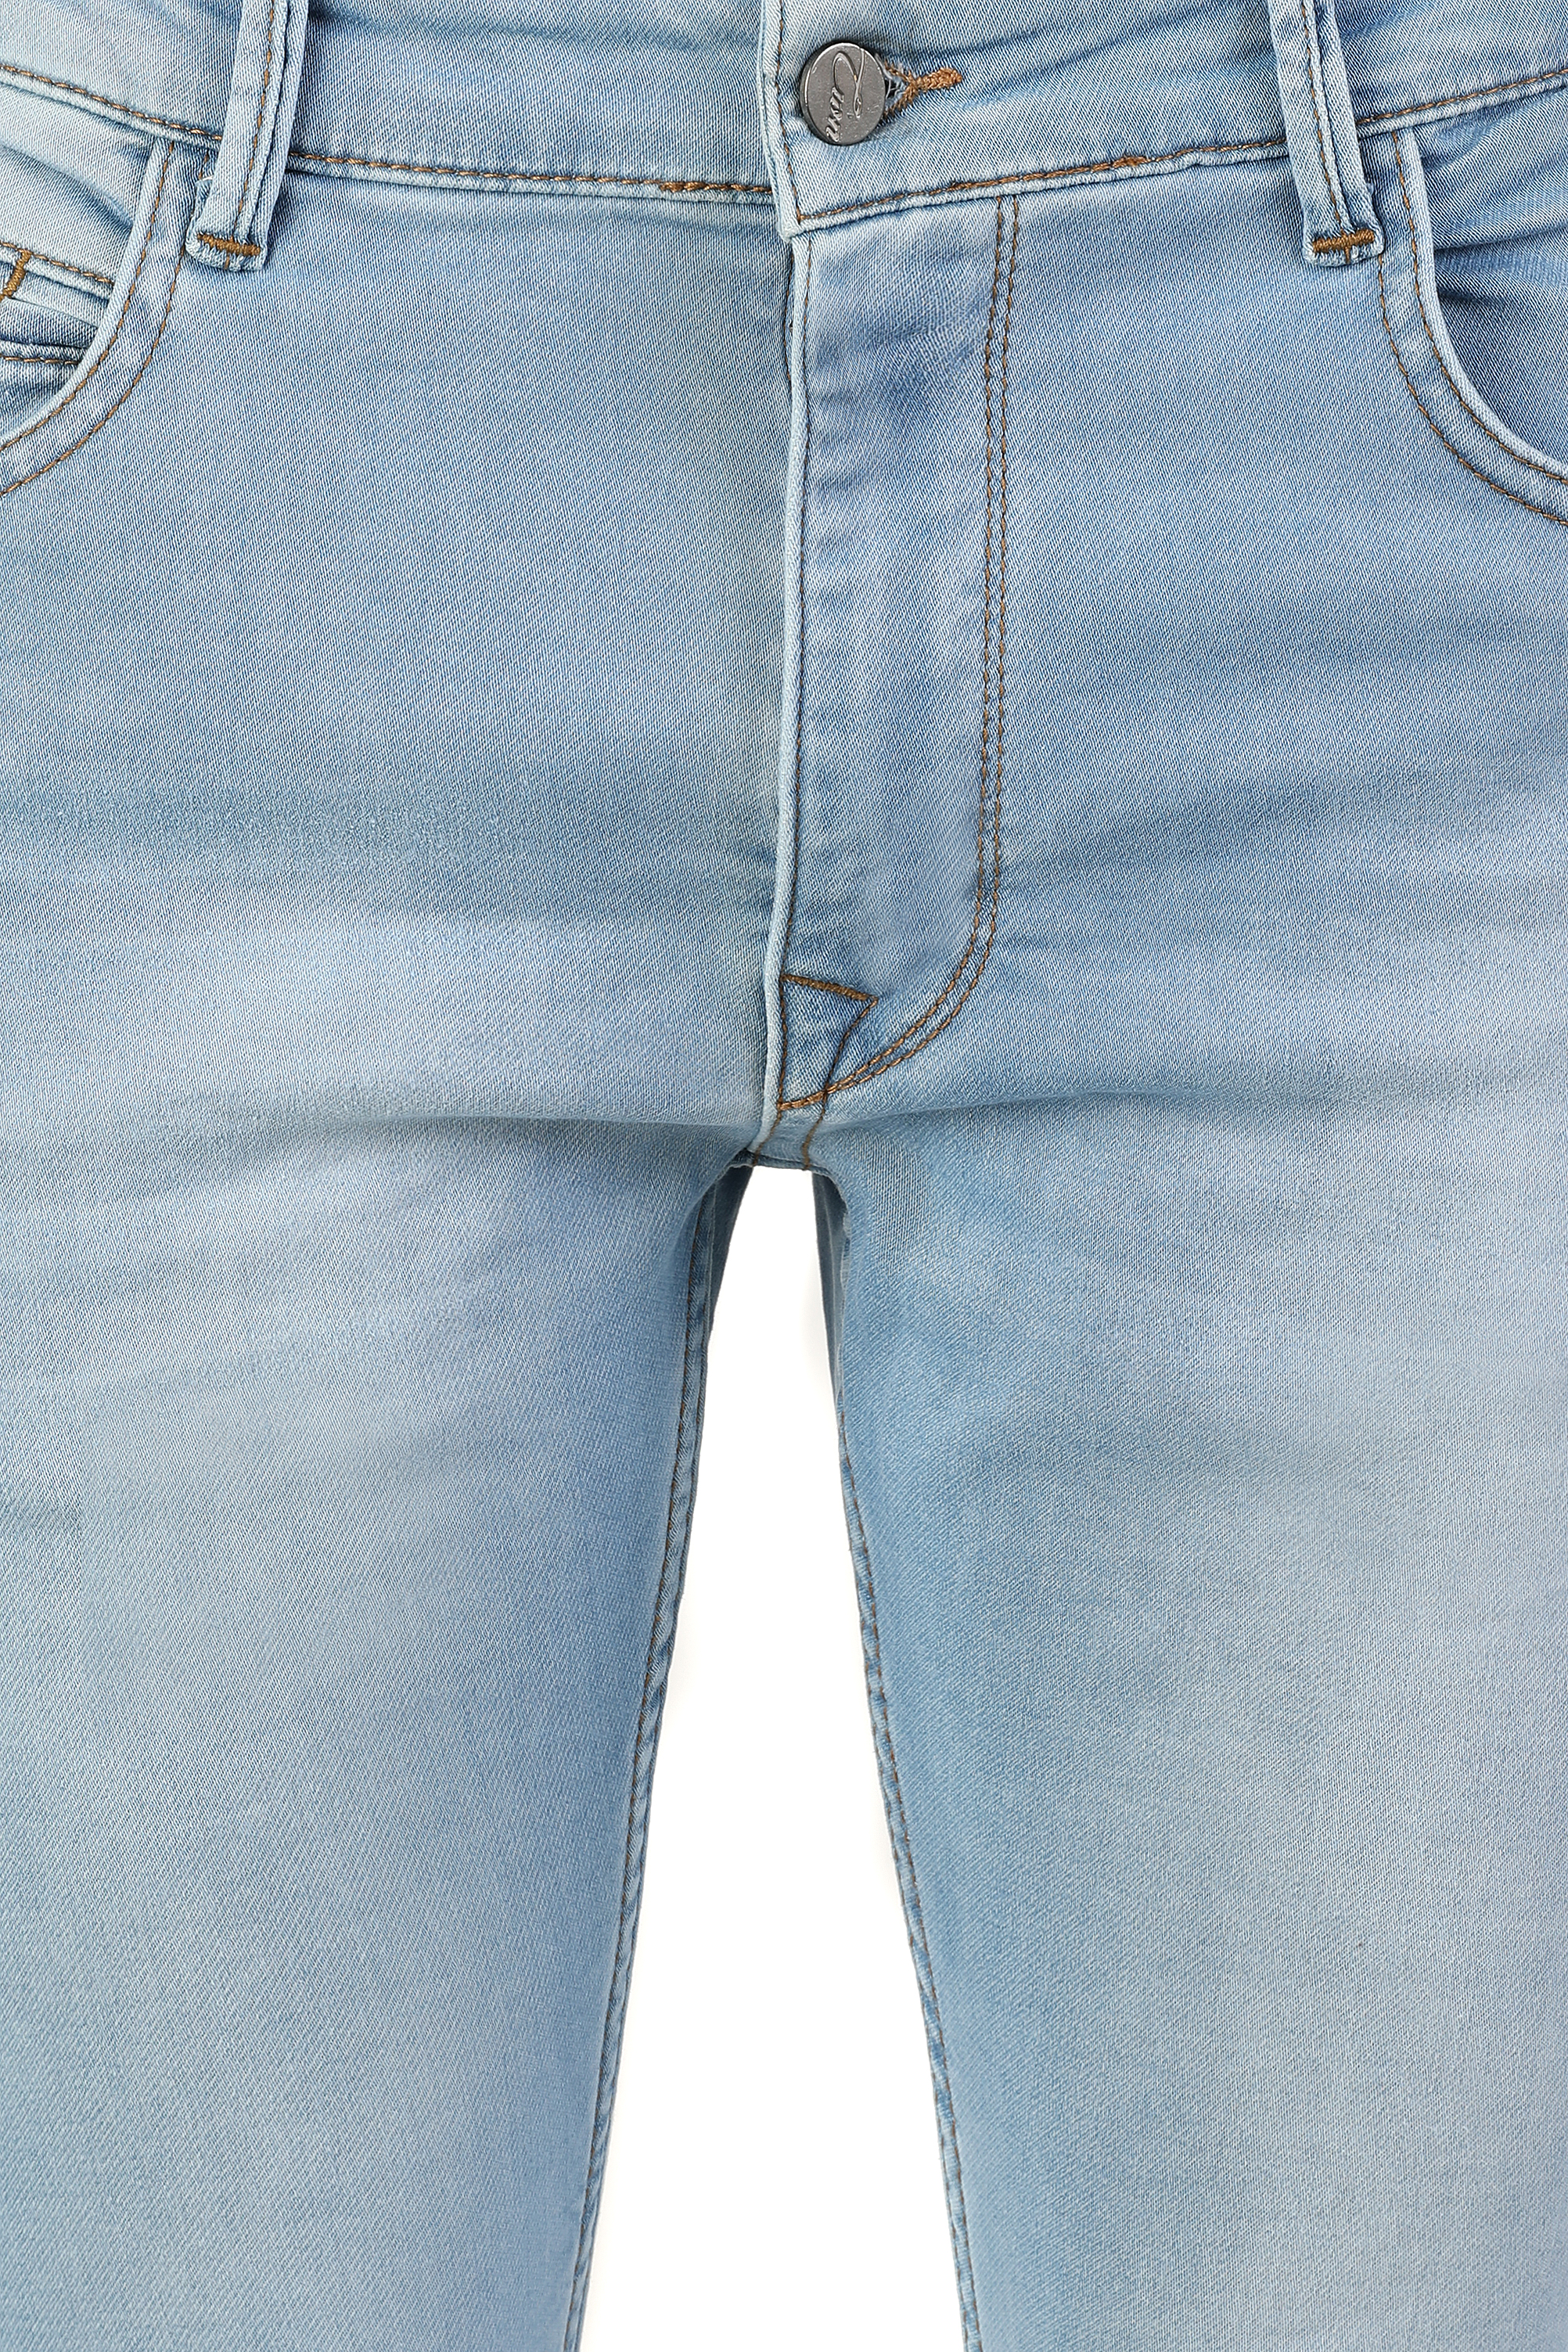 Ds Damat Twn Super Slim Fit Mavi Taşlı Denim Pantolon. 2